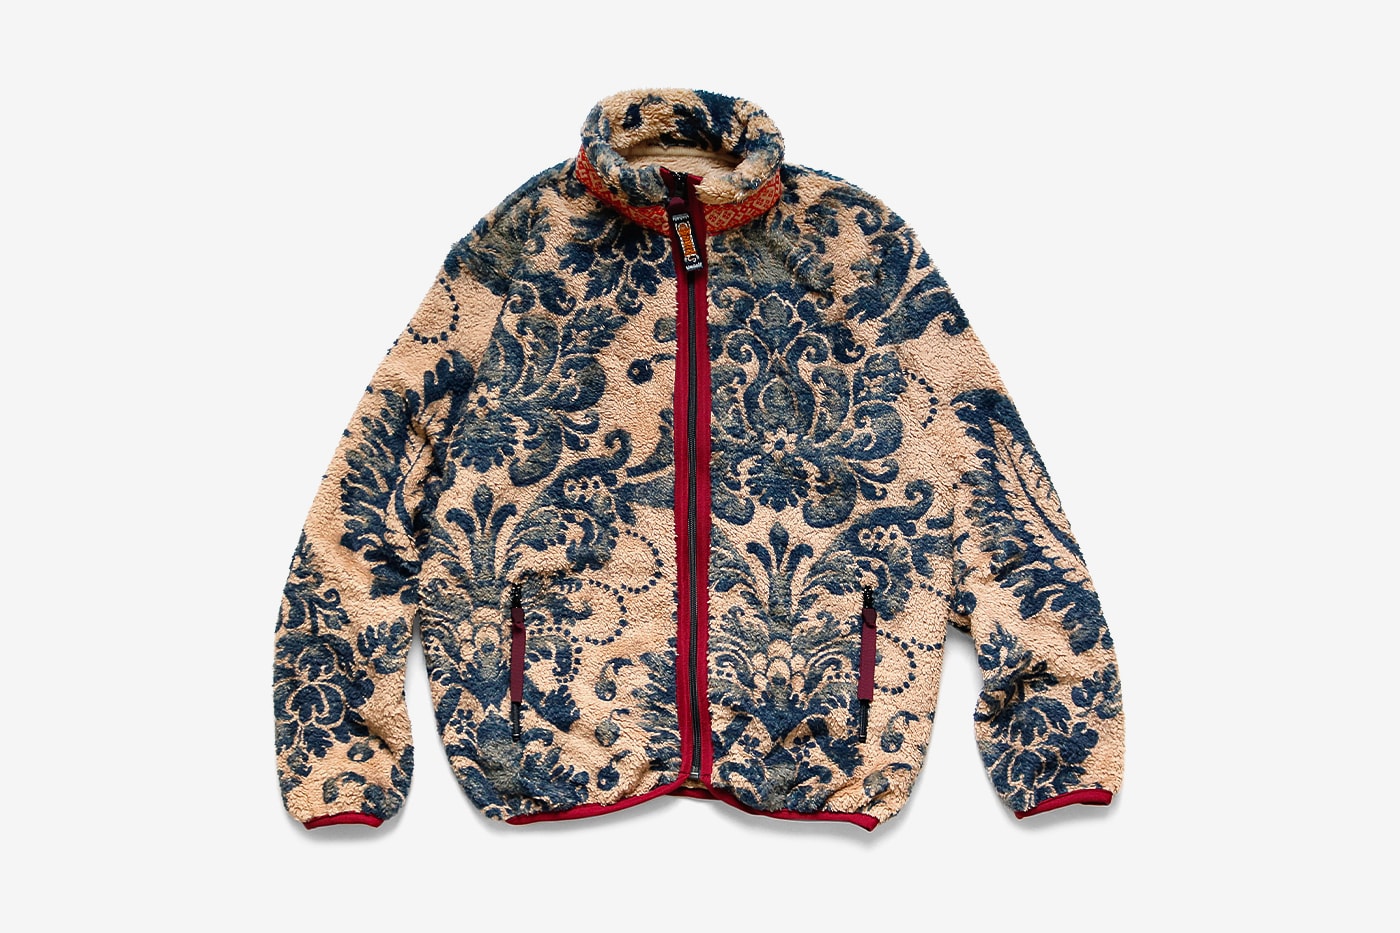 KAPITAL Damask Fleece Zip Jacket snap pullover toro Kiro Toshikiyo Hirata traditional navajo paisley floral indigo poly outerwear fall winter 2019